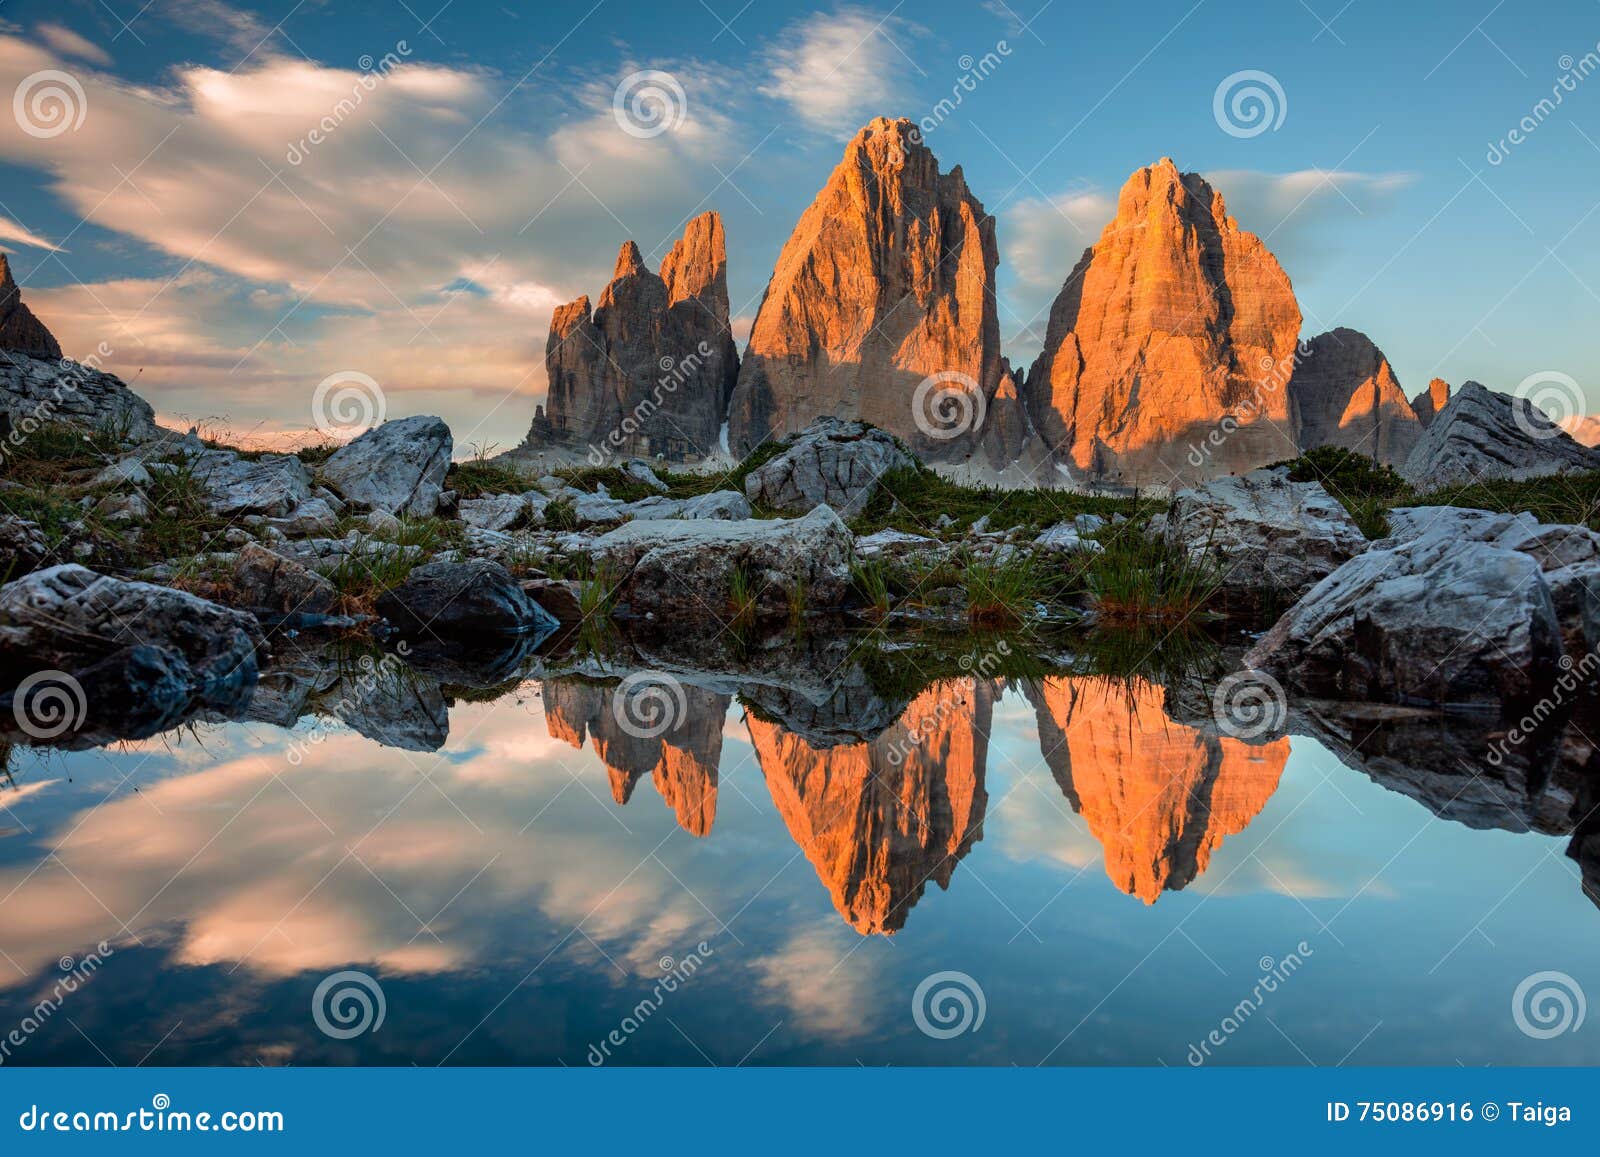 tre cime di lavaredo with reflection in lake at sundown, dolomites alps